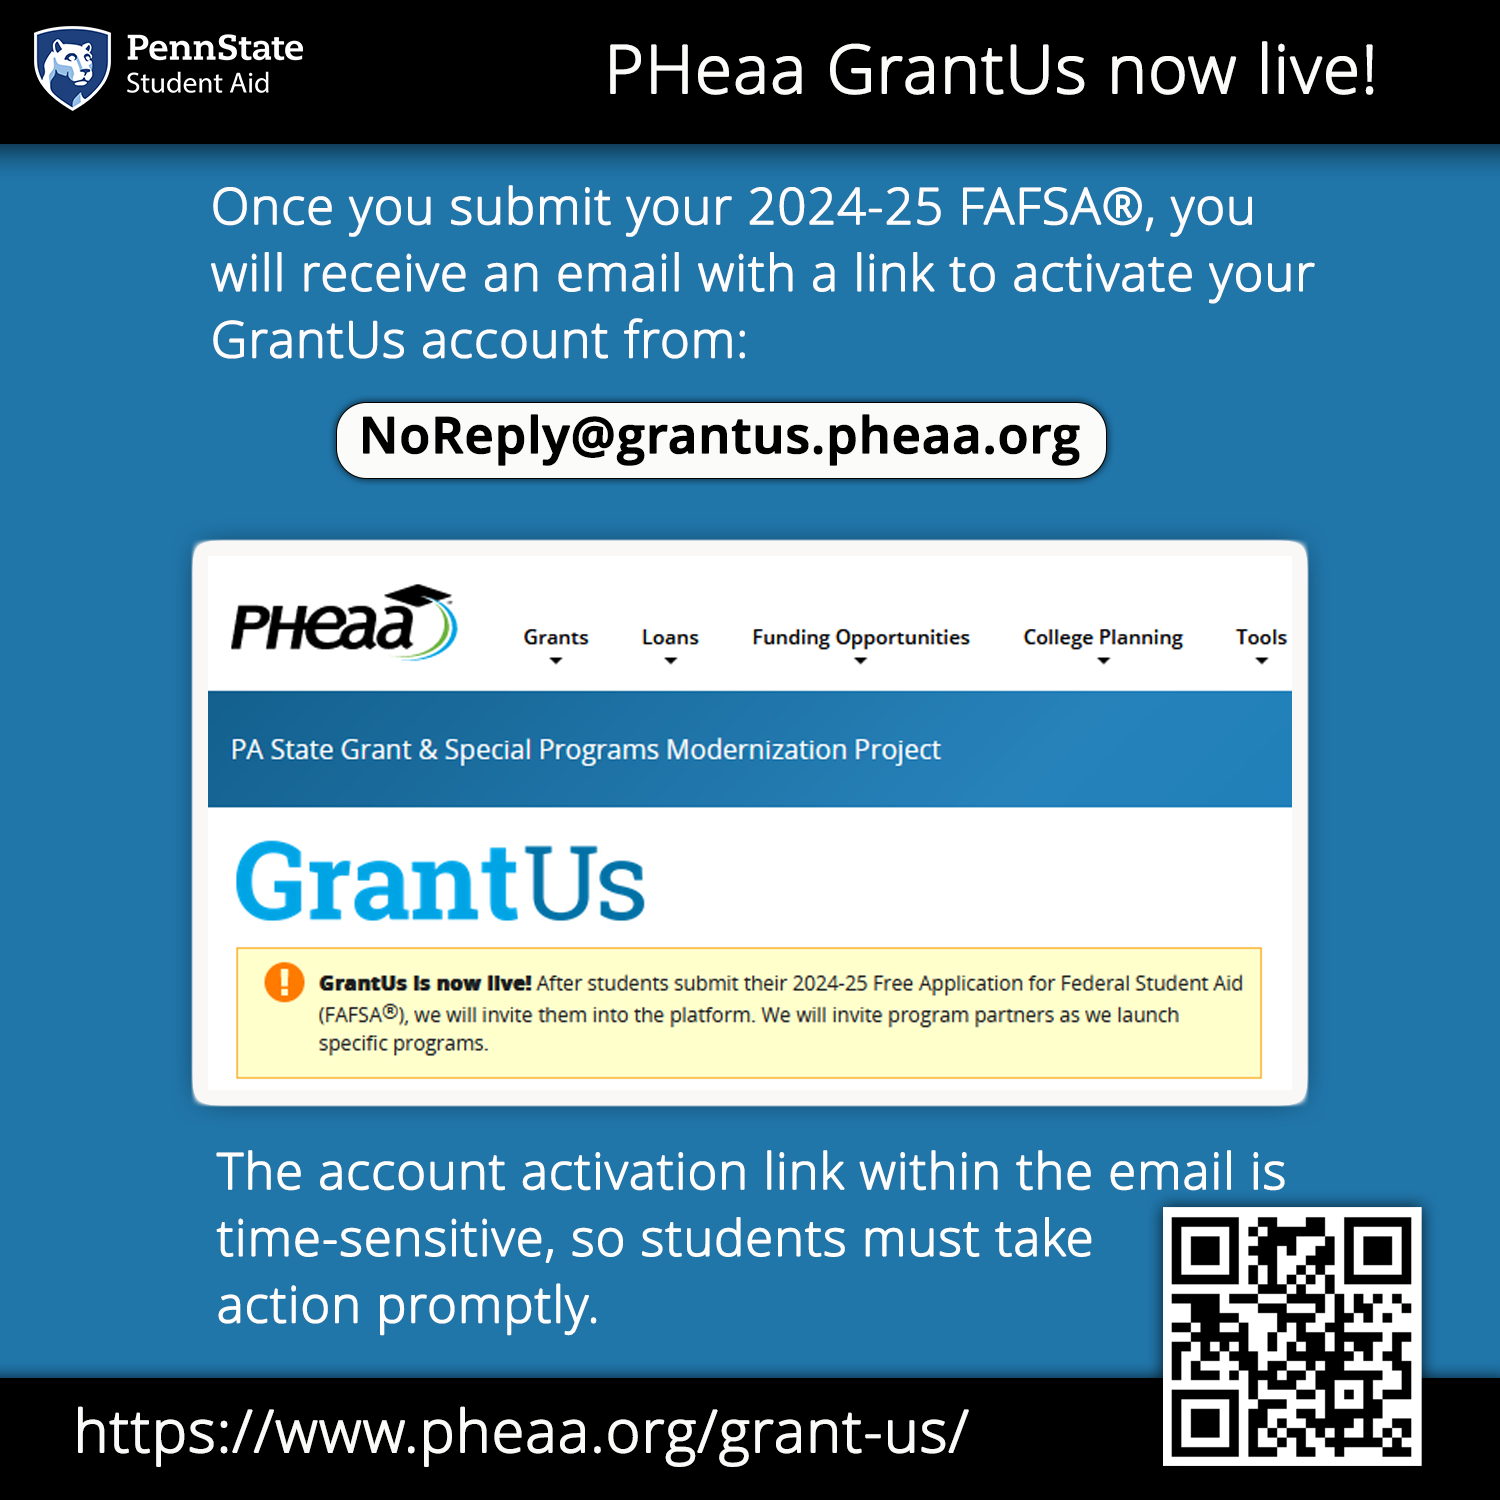 PHEAA GrantUs: https://www.pheaa.org/grant-us/